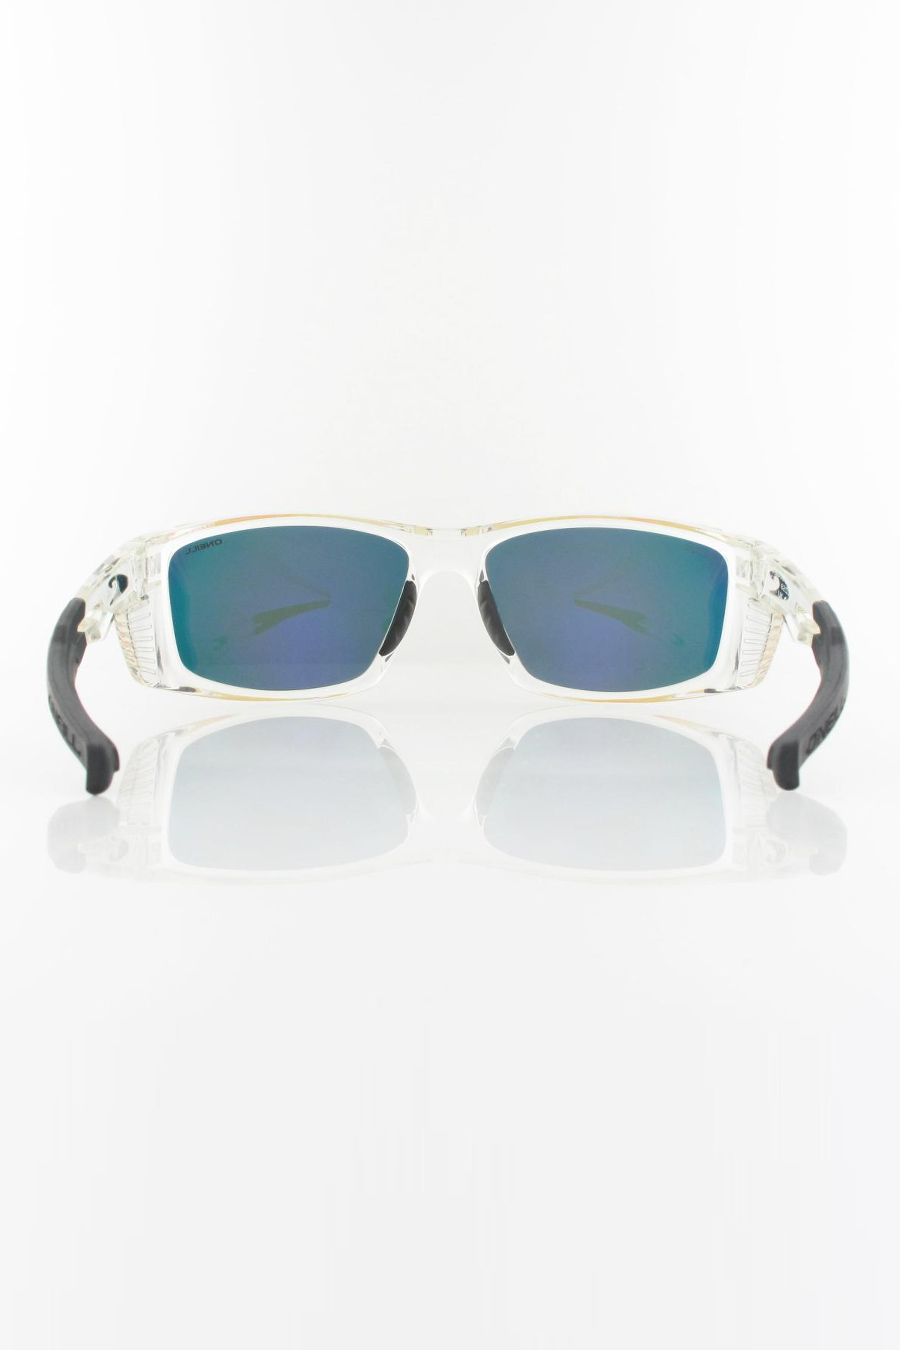 Sunglasses ONEILL ONS-9002-20-113P